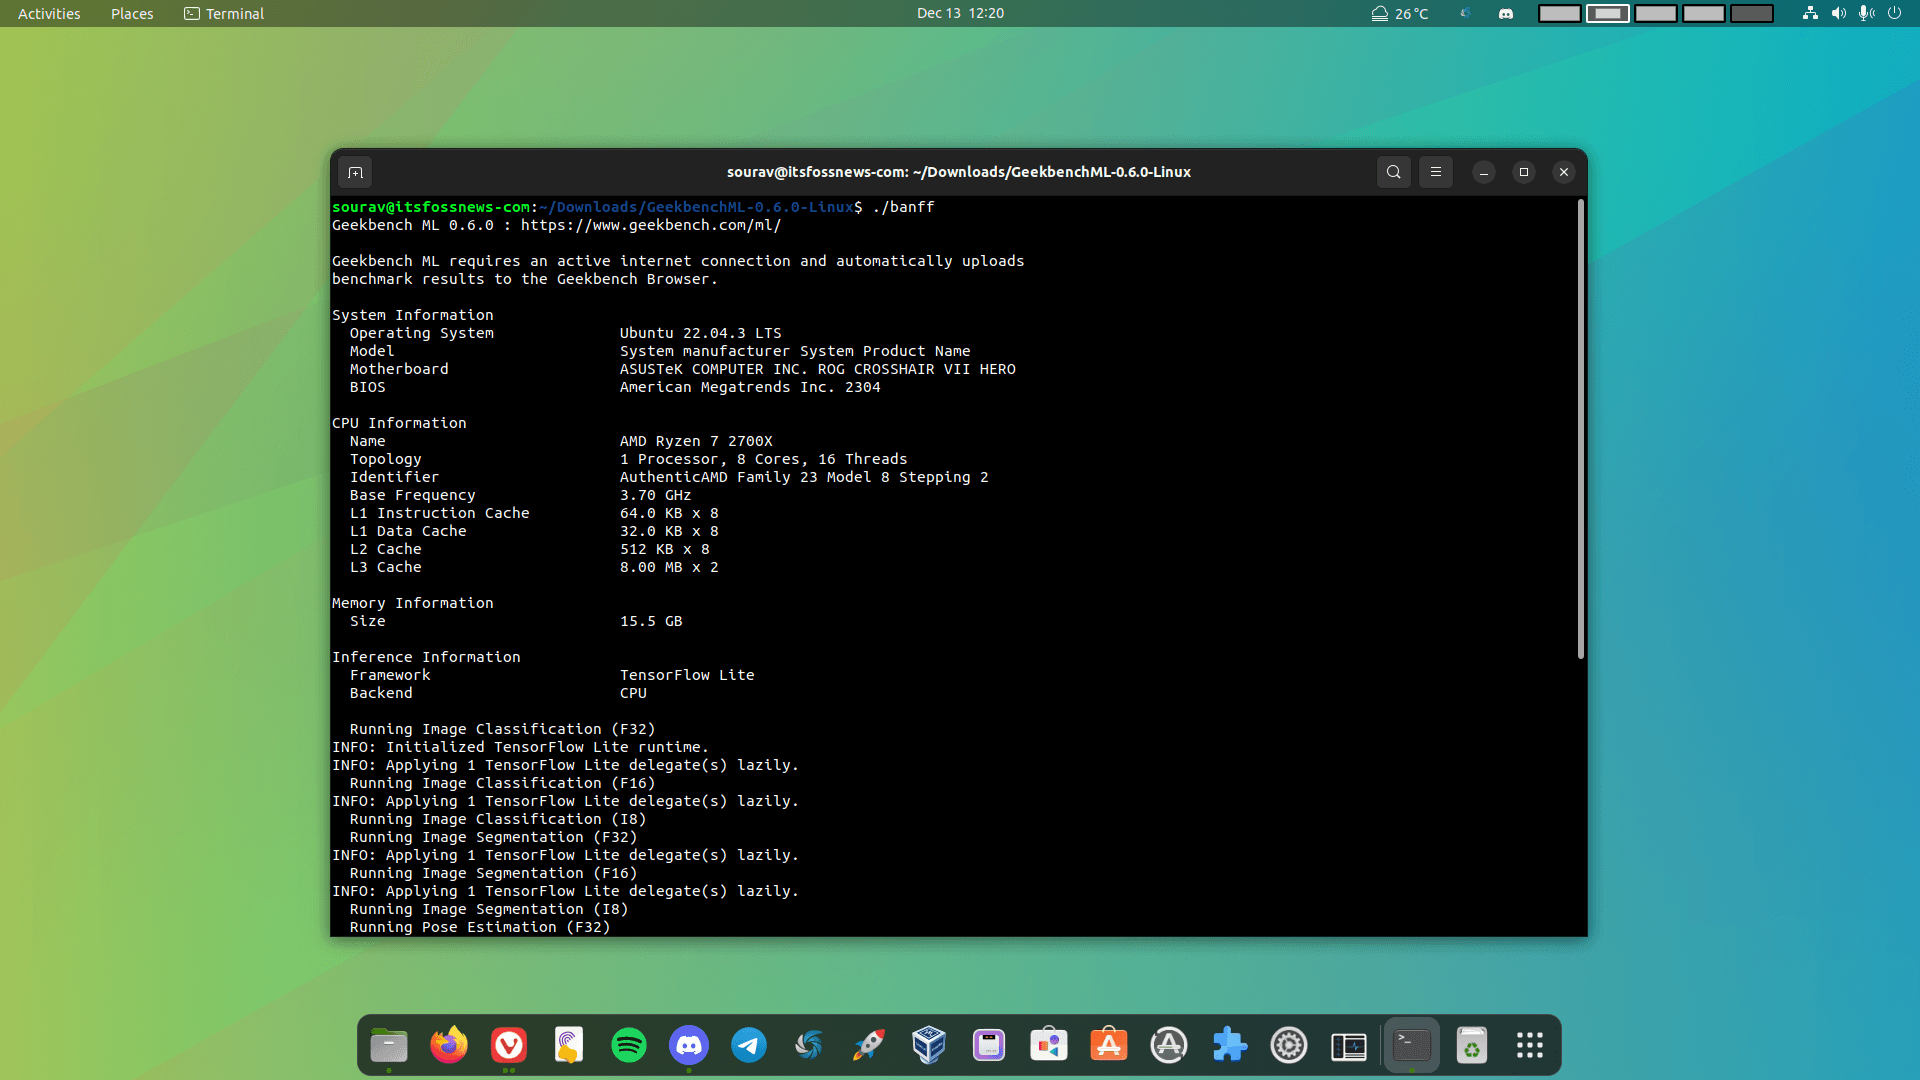 a screenshot of geekbench ml running on ubuntu